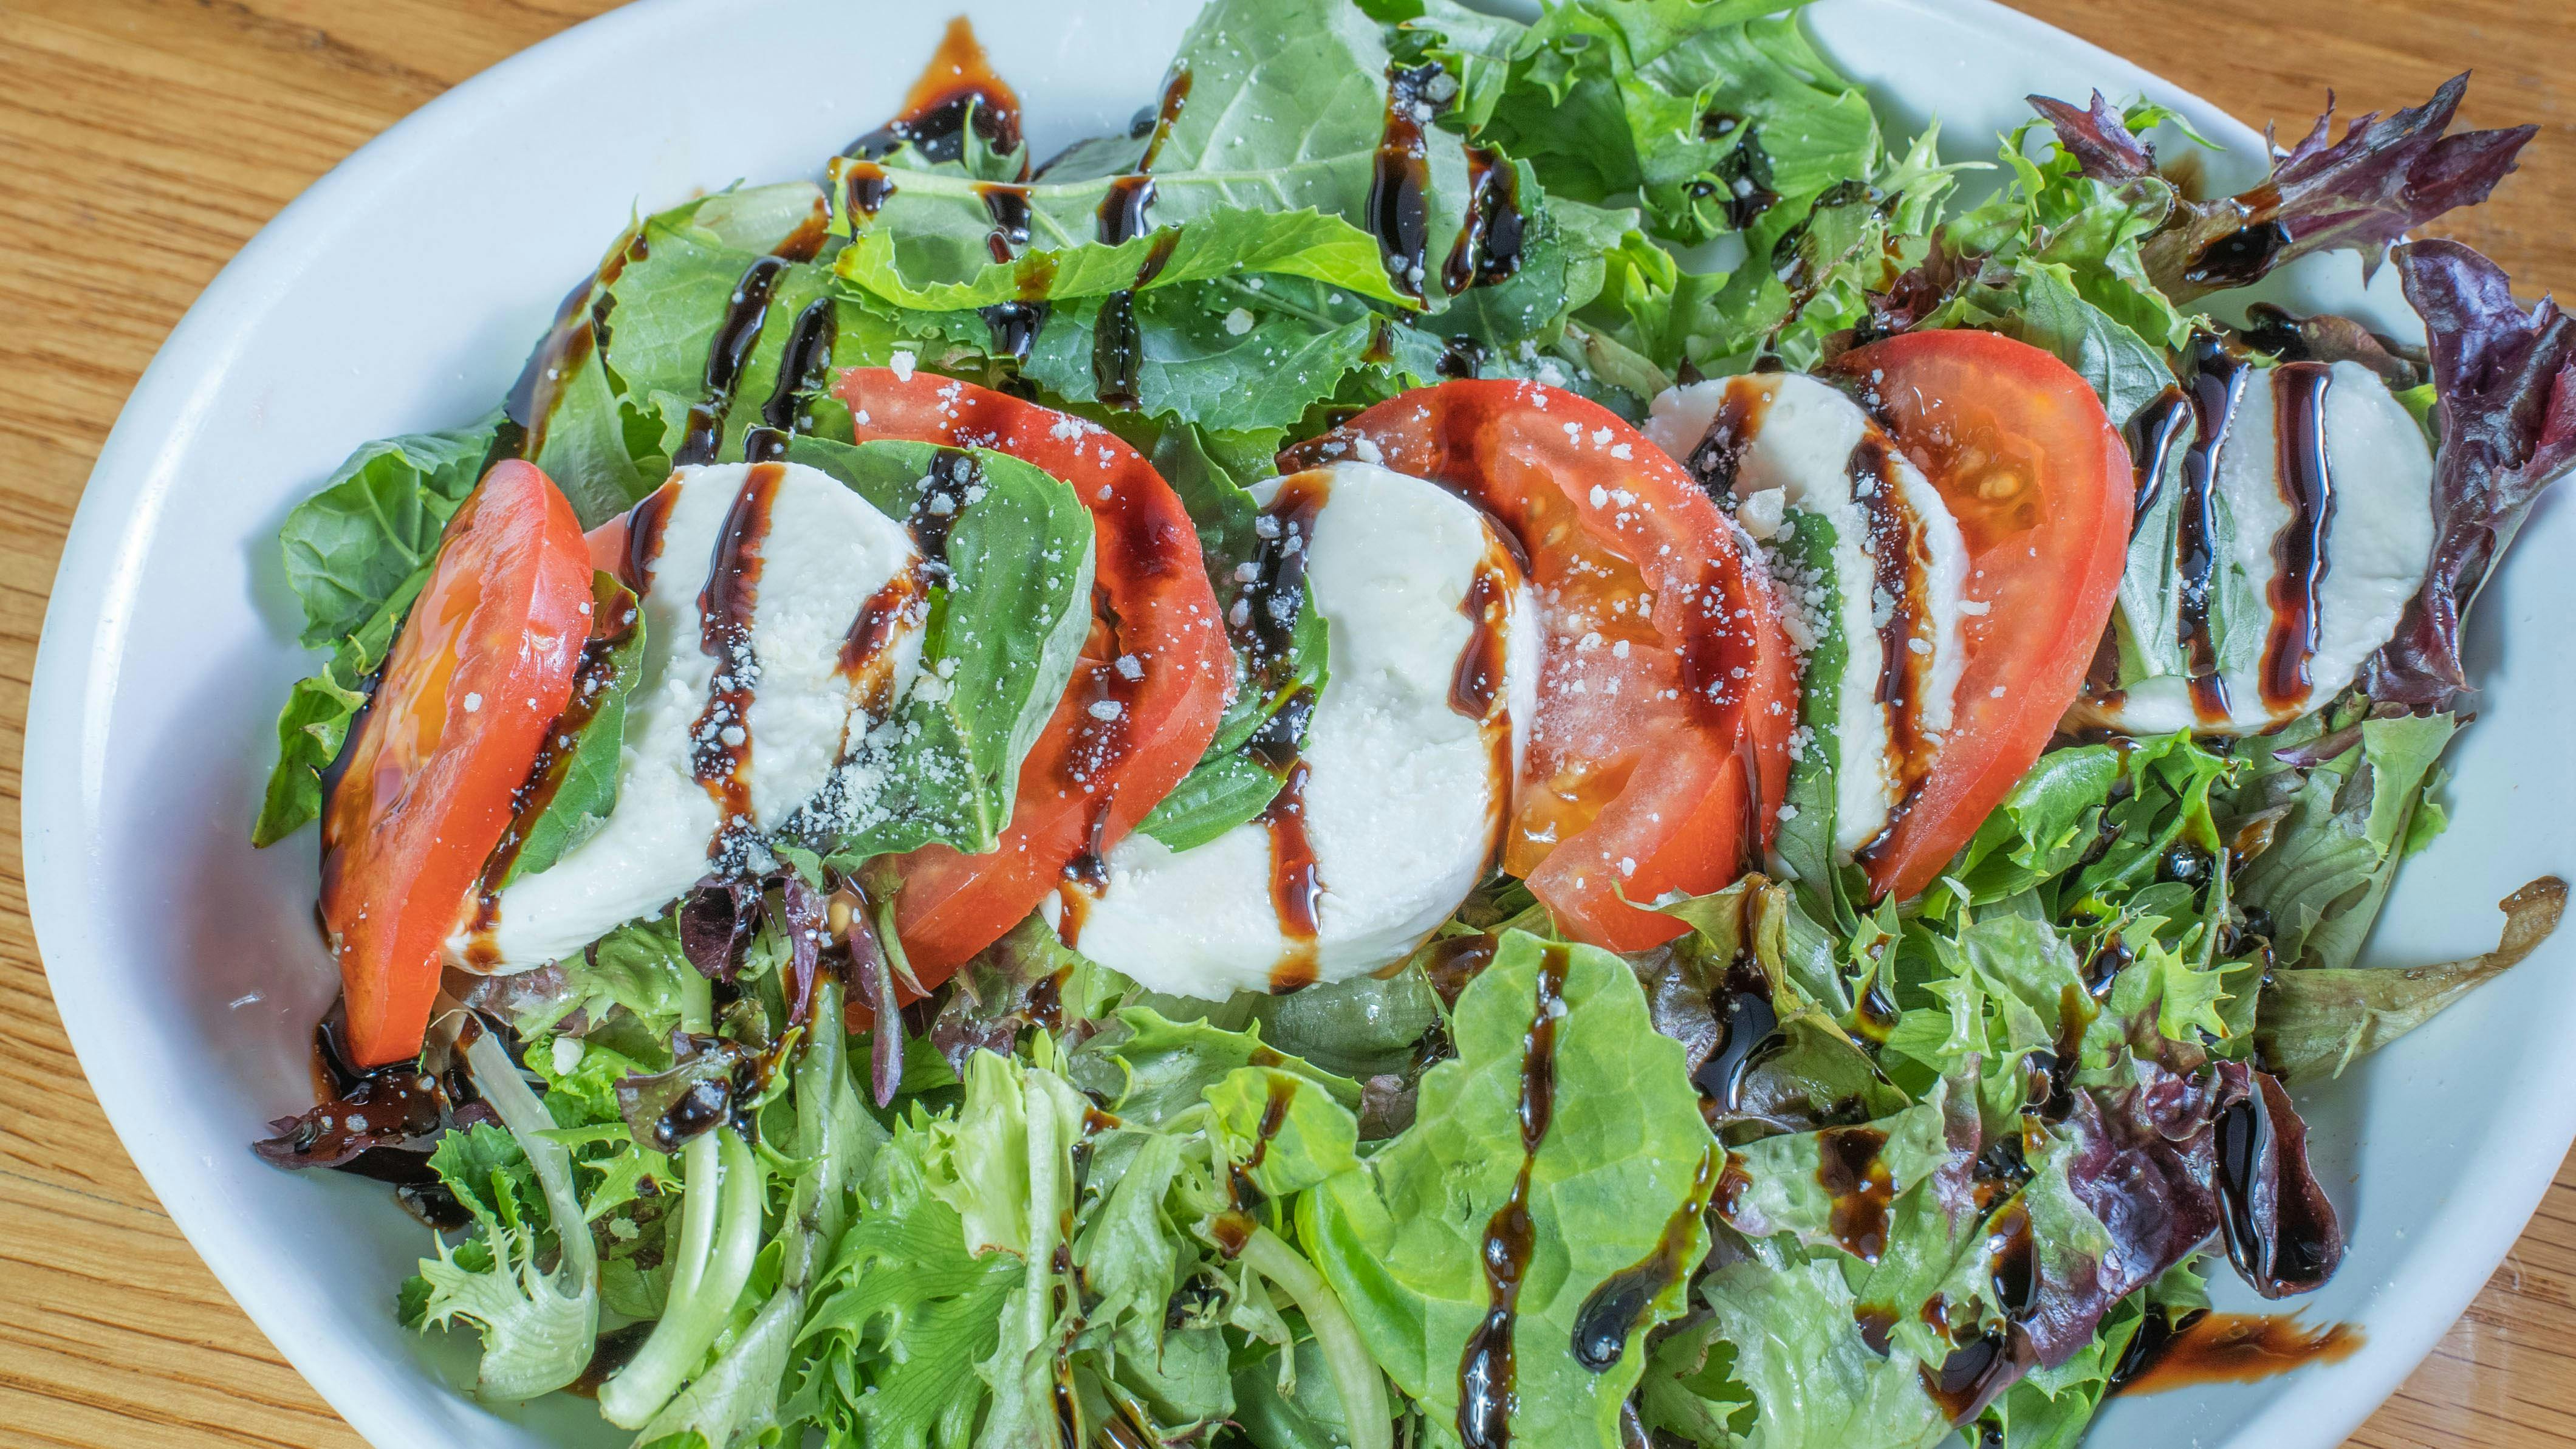 Caprese Salad from Austin Chicken Sandwich - Burnet Rd in Austin, TX